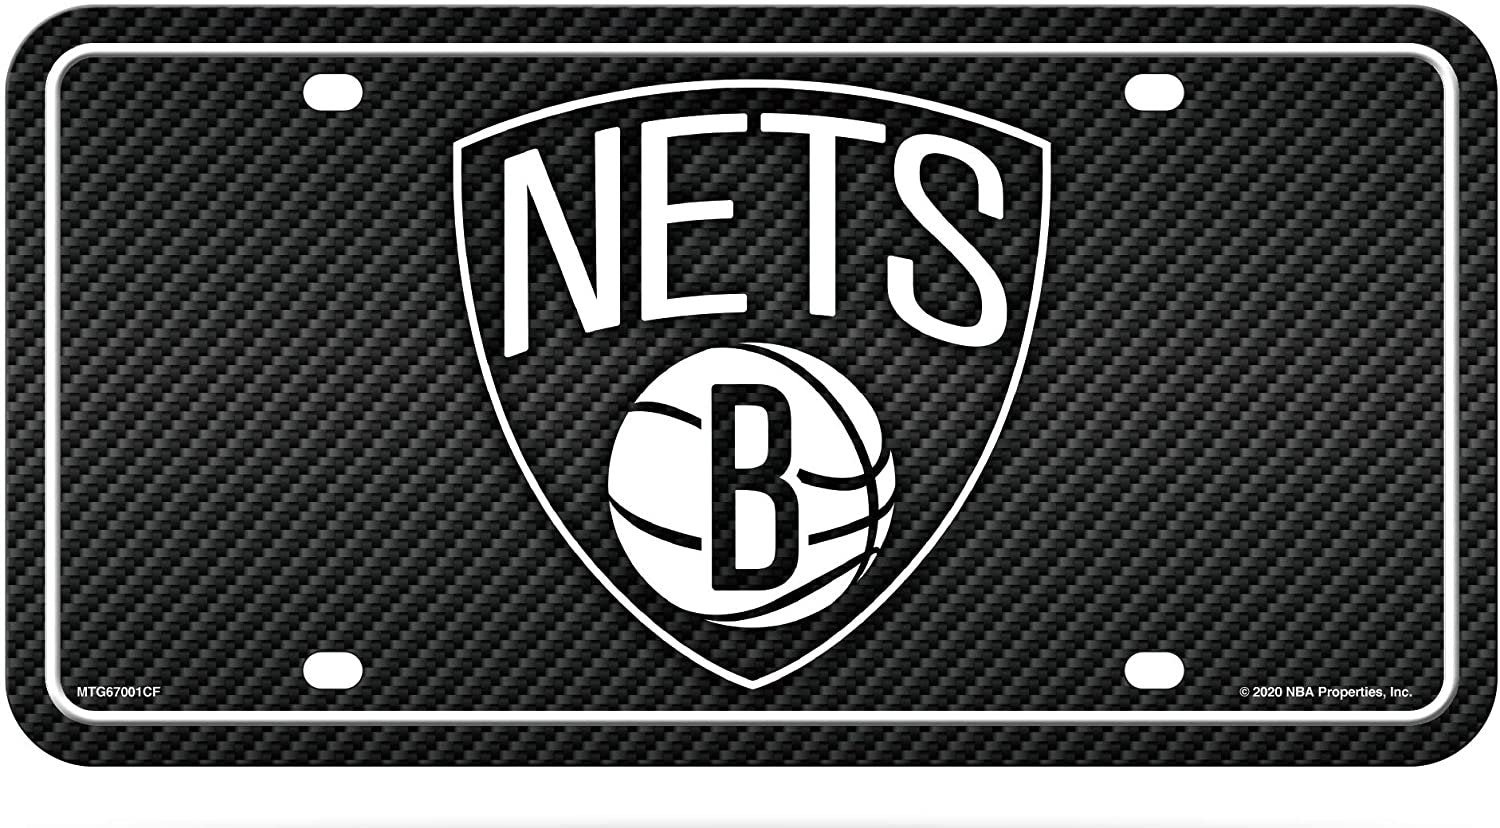 Brooklyn Nets Metal Auto Tag License Plate, Carbon Fiber Design, 6x12 Inch